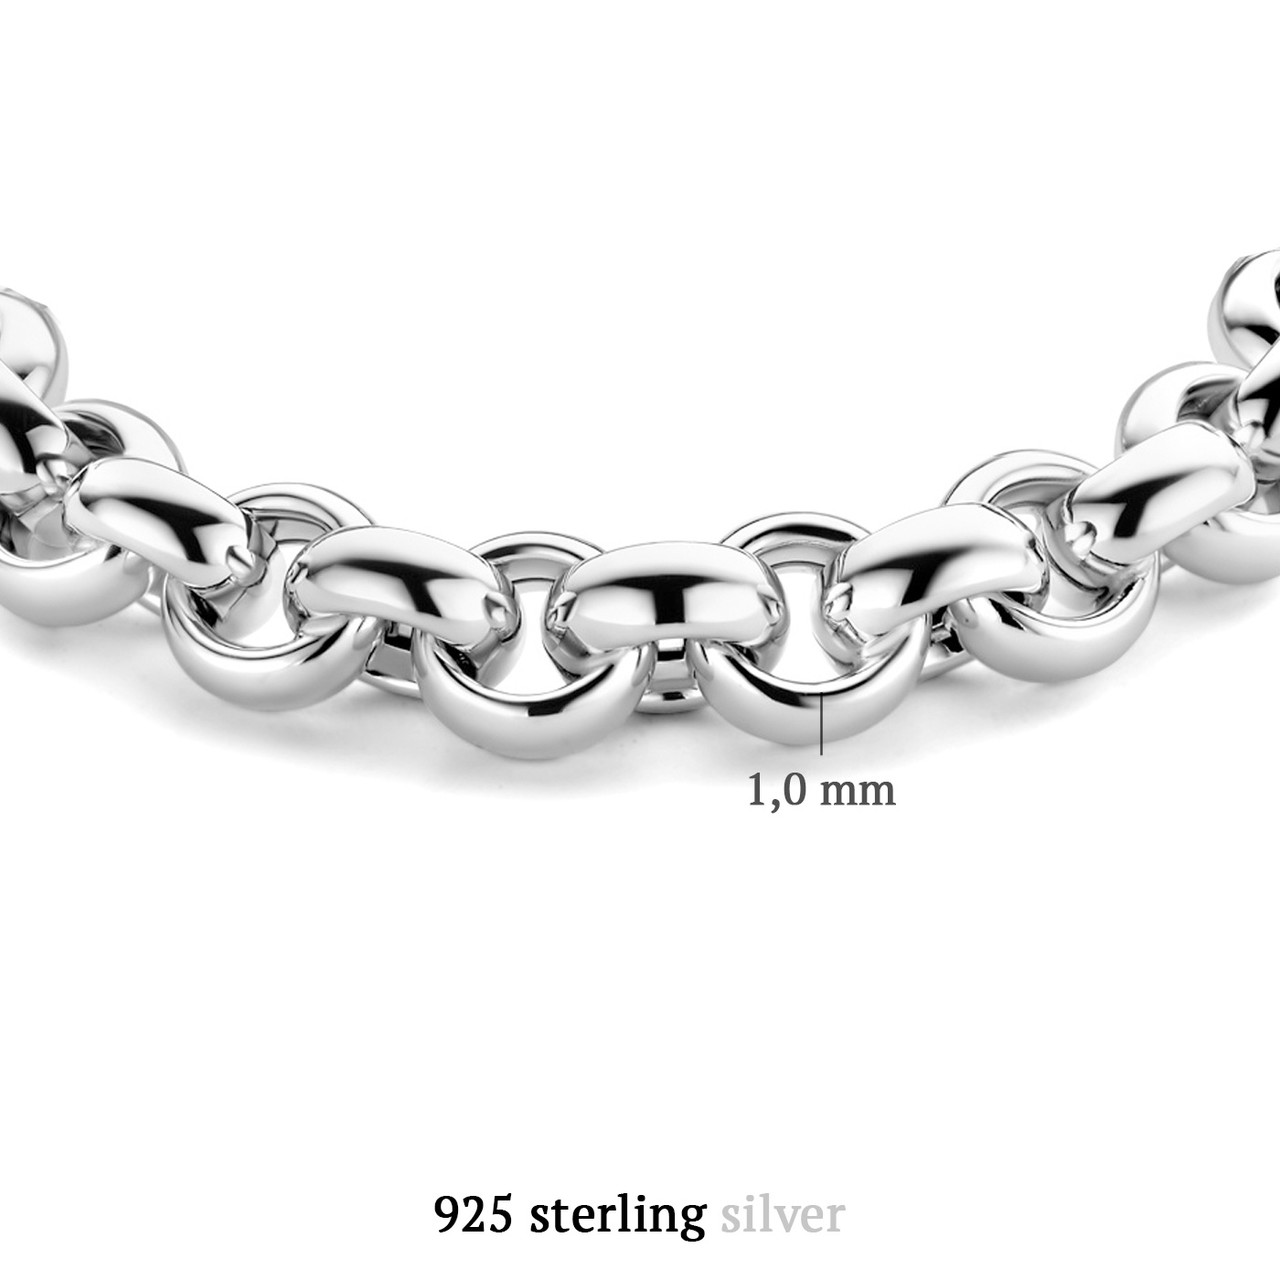 Parte Di Me PDM32011 silver bracelet link - sterling 925